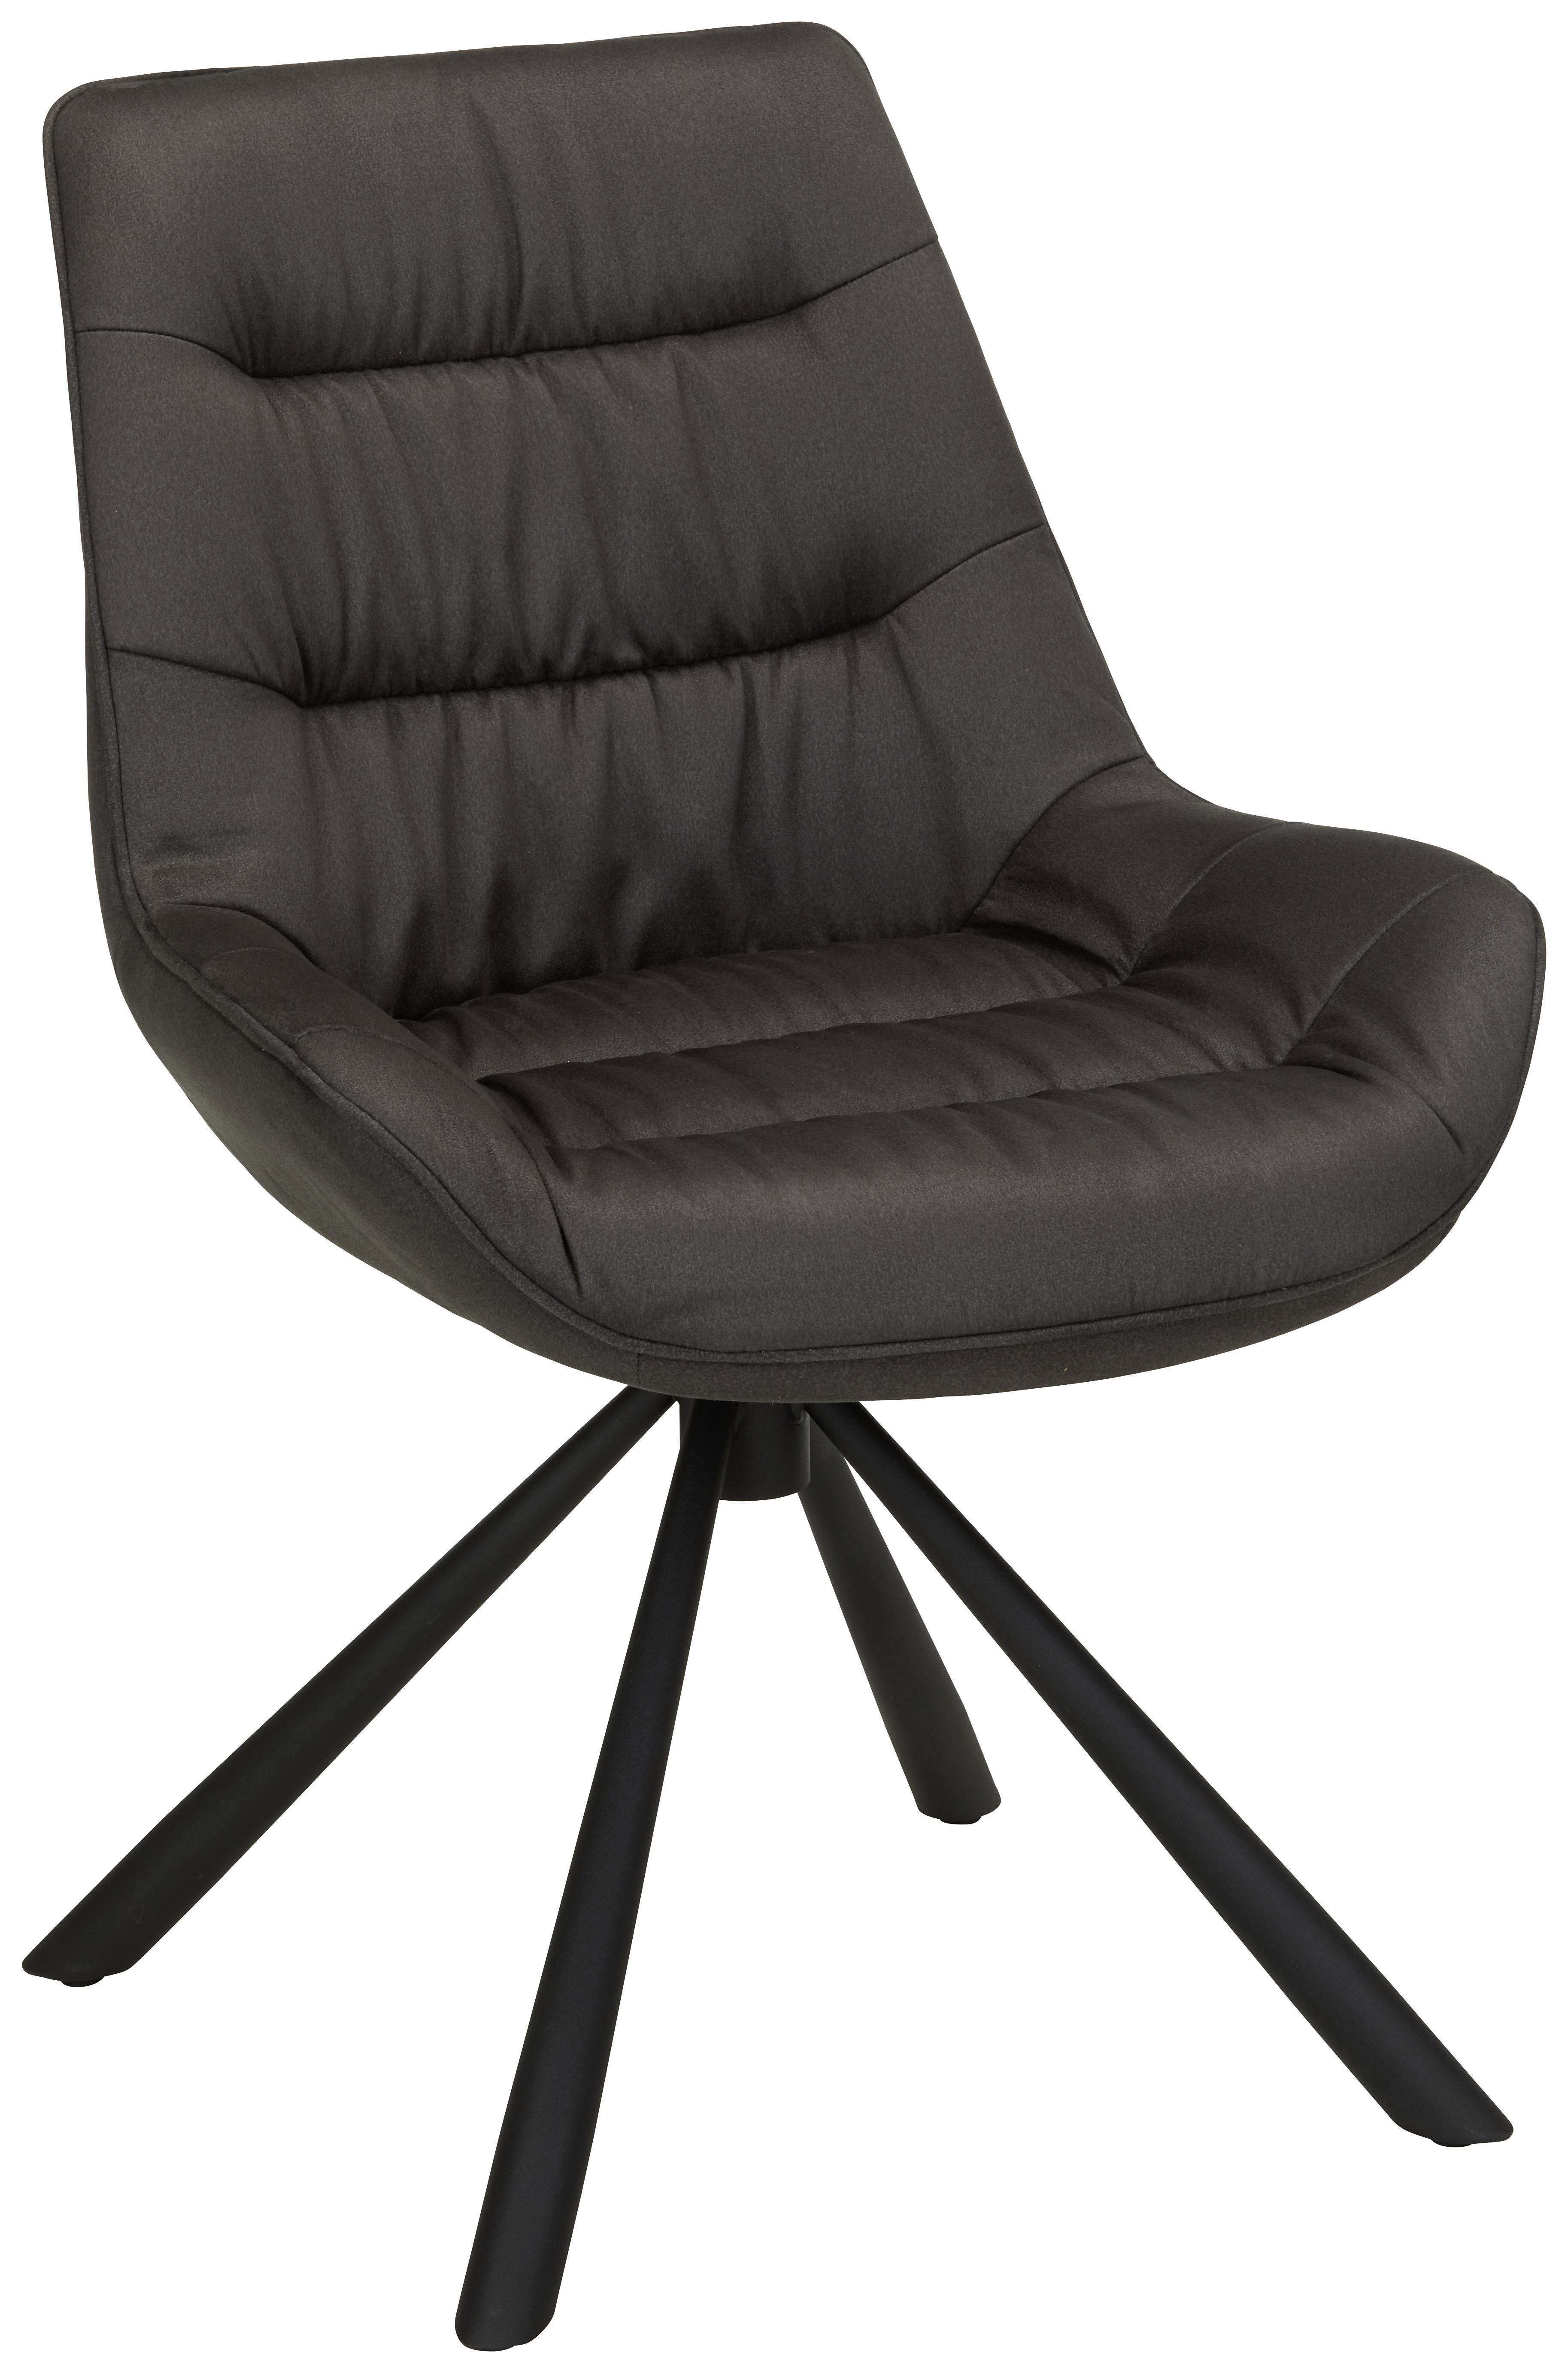 Stuhl in Grau/Schwarz - Schwarz/Grau, Modern, Textil/Metall (57,5/85/64cm) - Modern Living